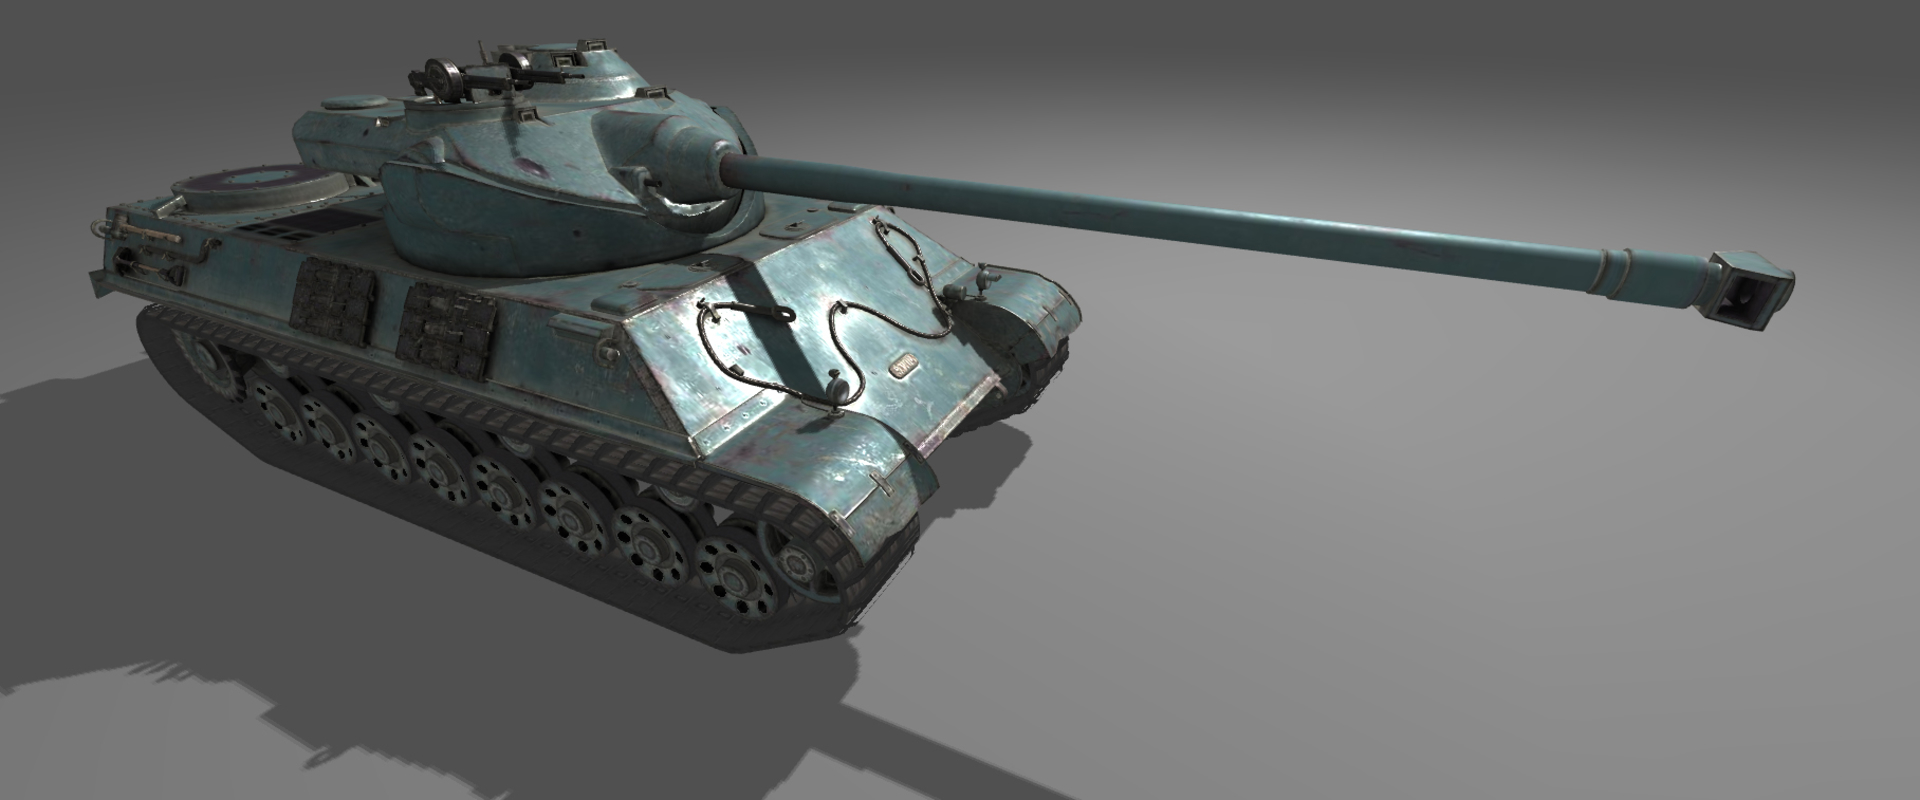 Új prémium tank: SOMUA SM